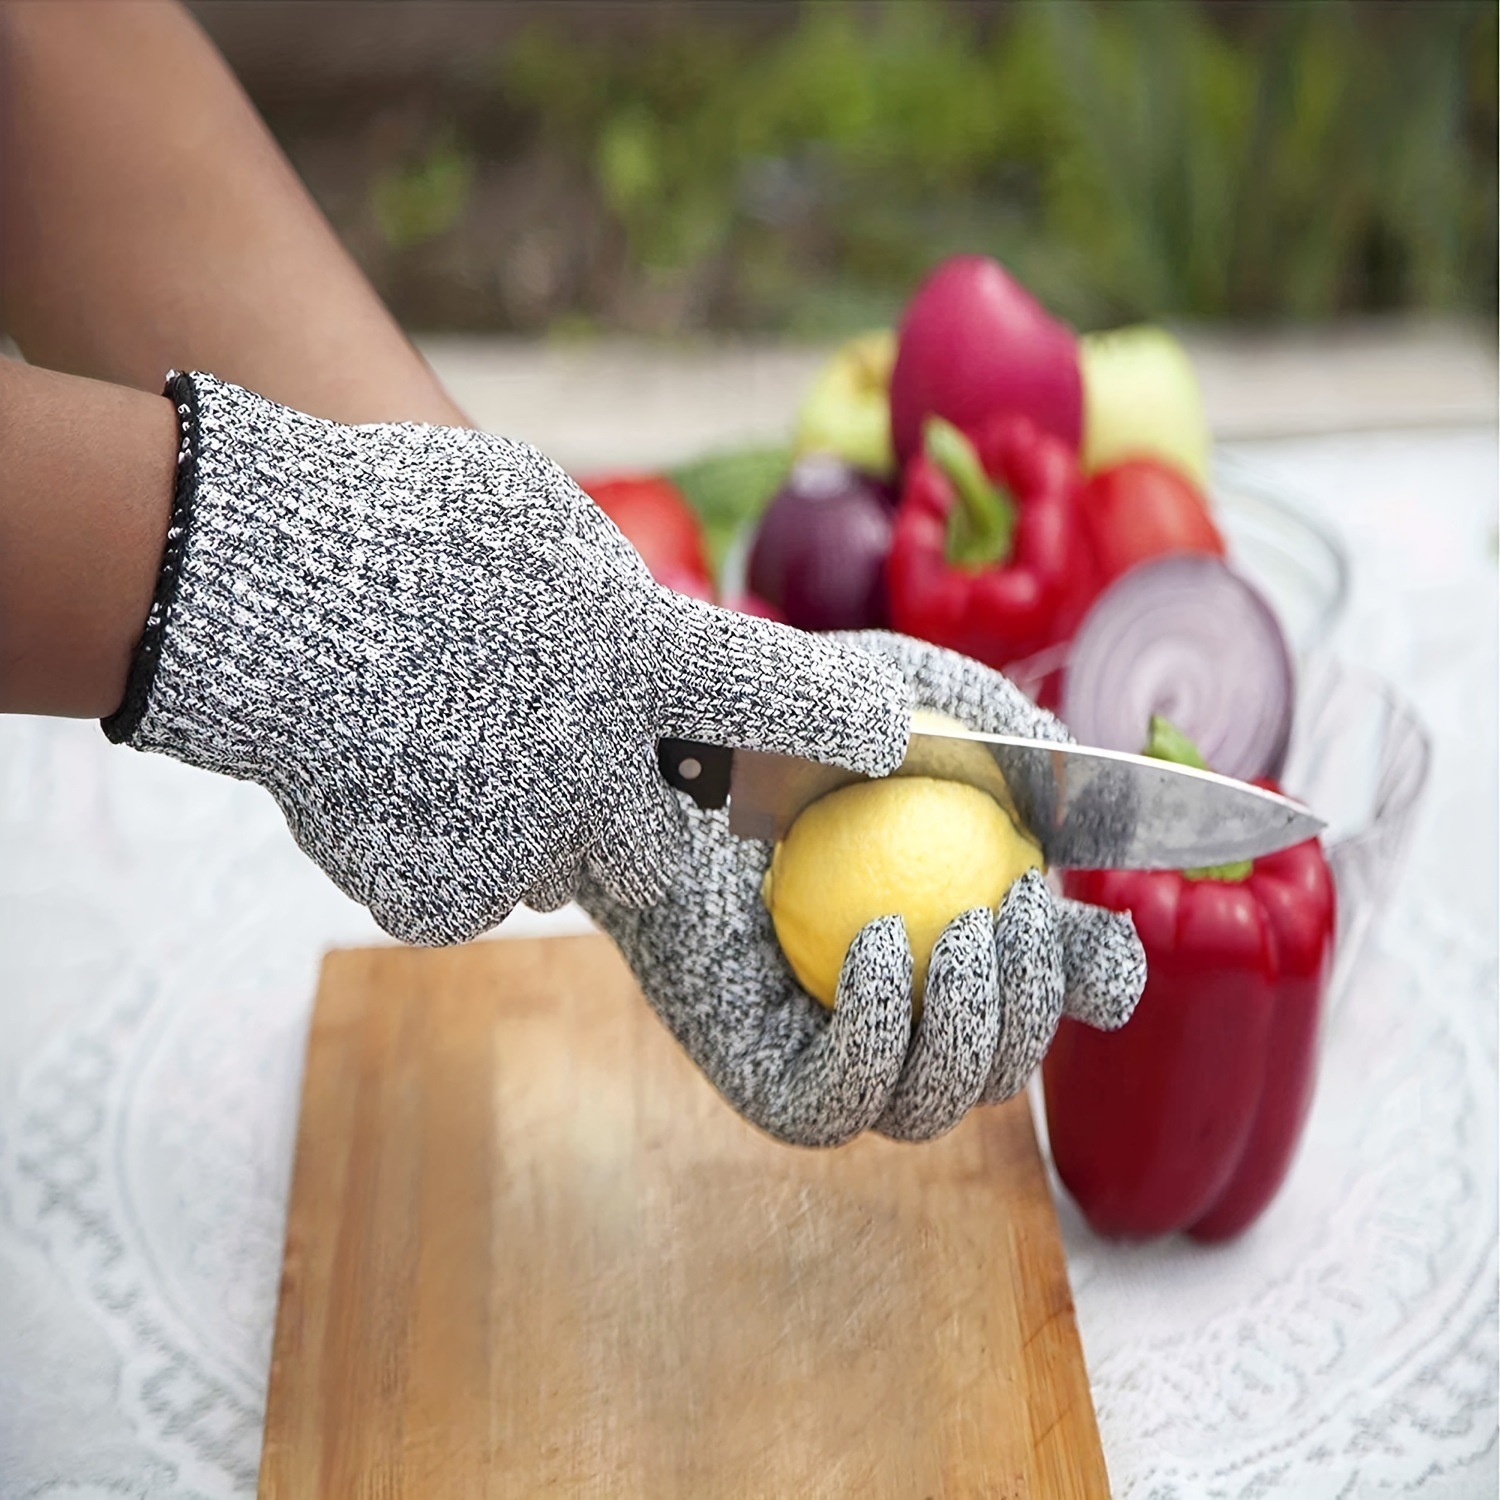 Cut Resistant Gloves for Kitchen